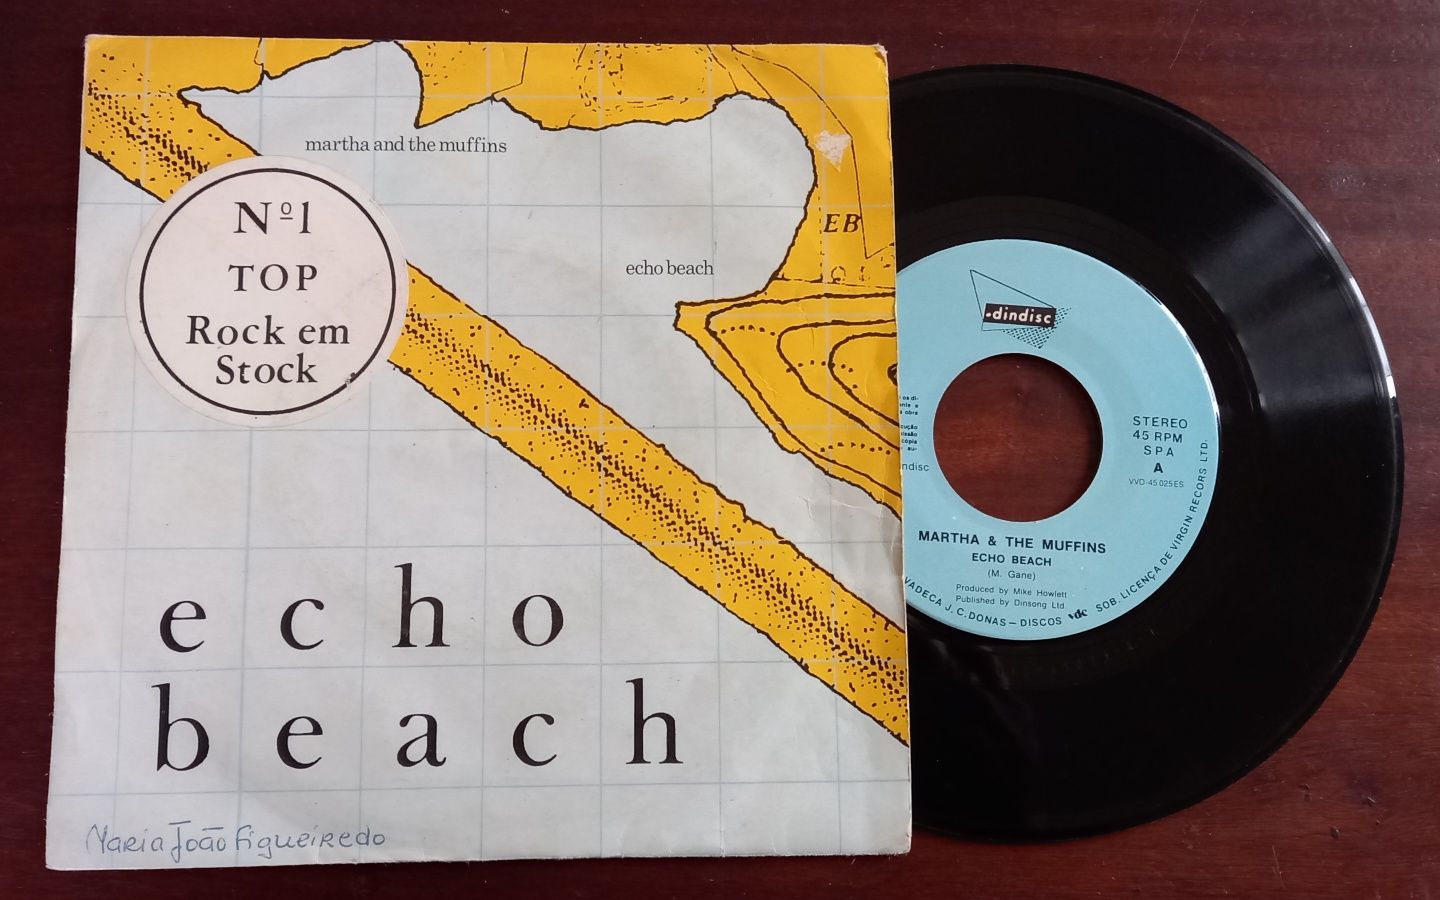 Martha And The Muffins - echo beach - Single 7" - New Wave 1980